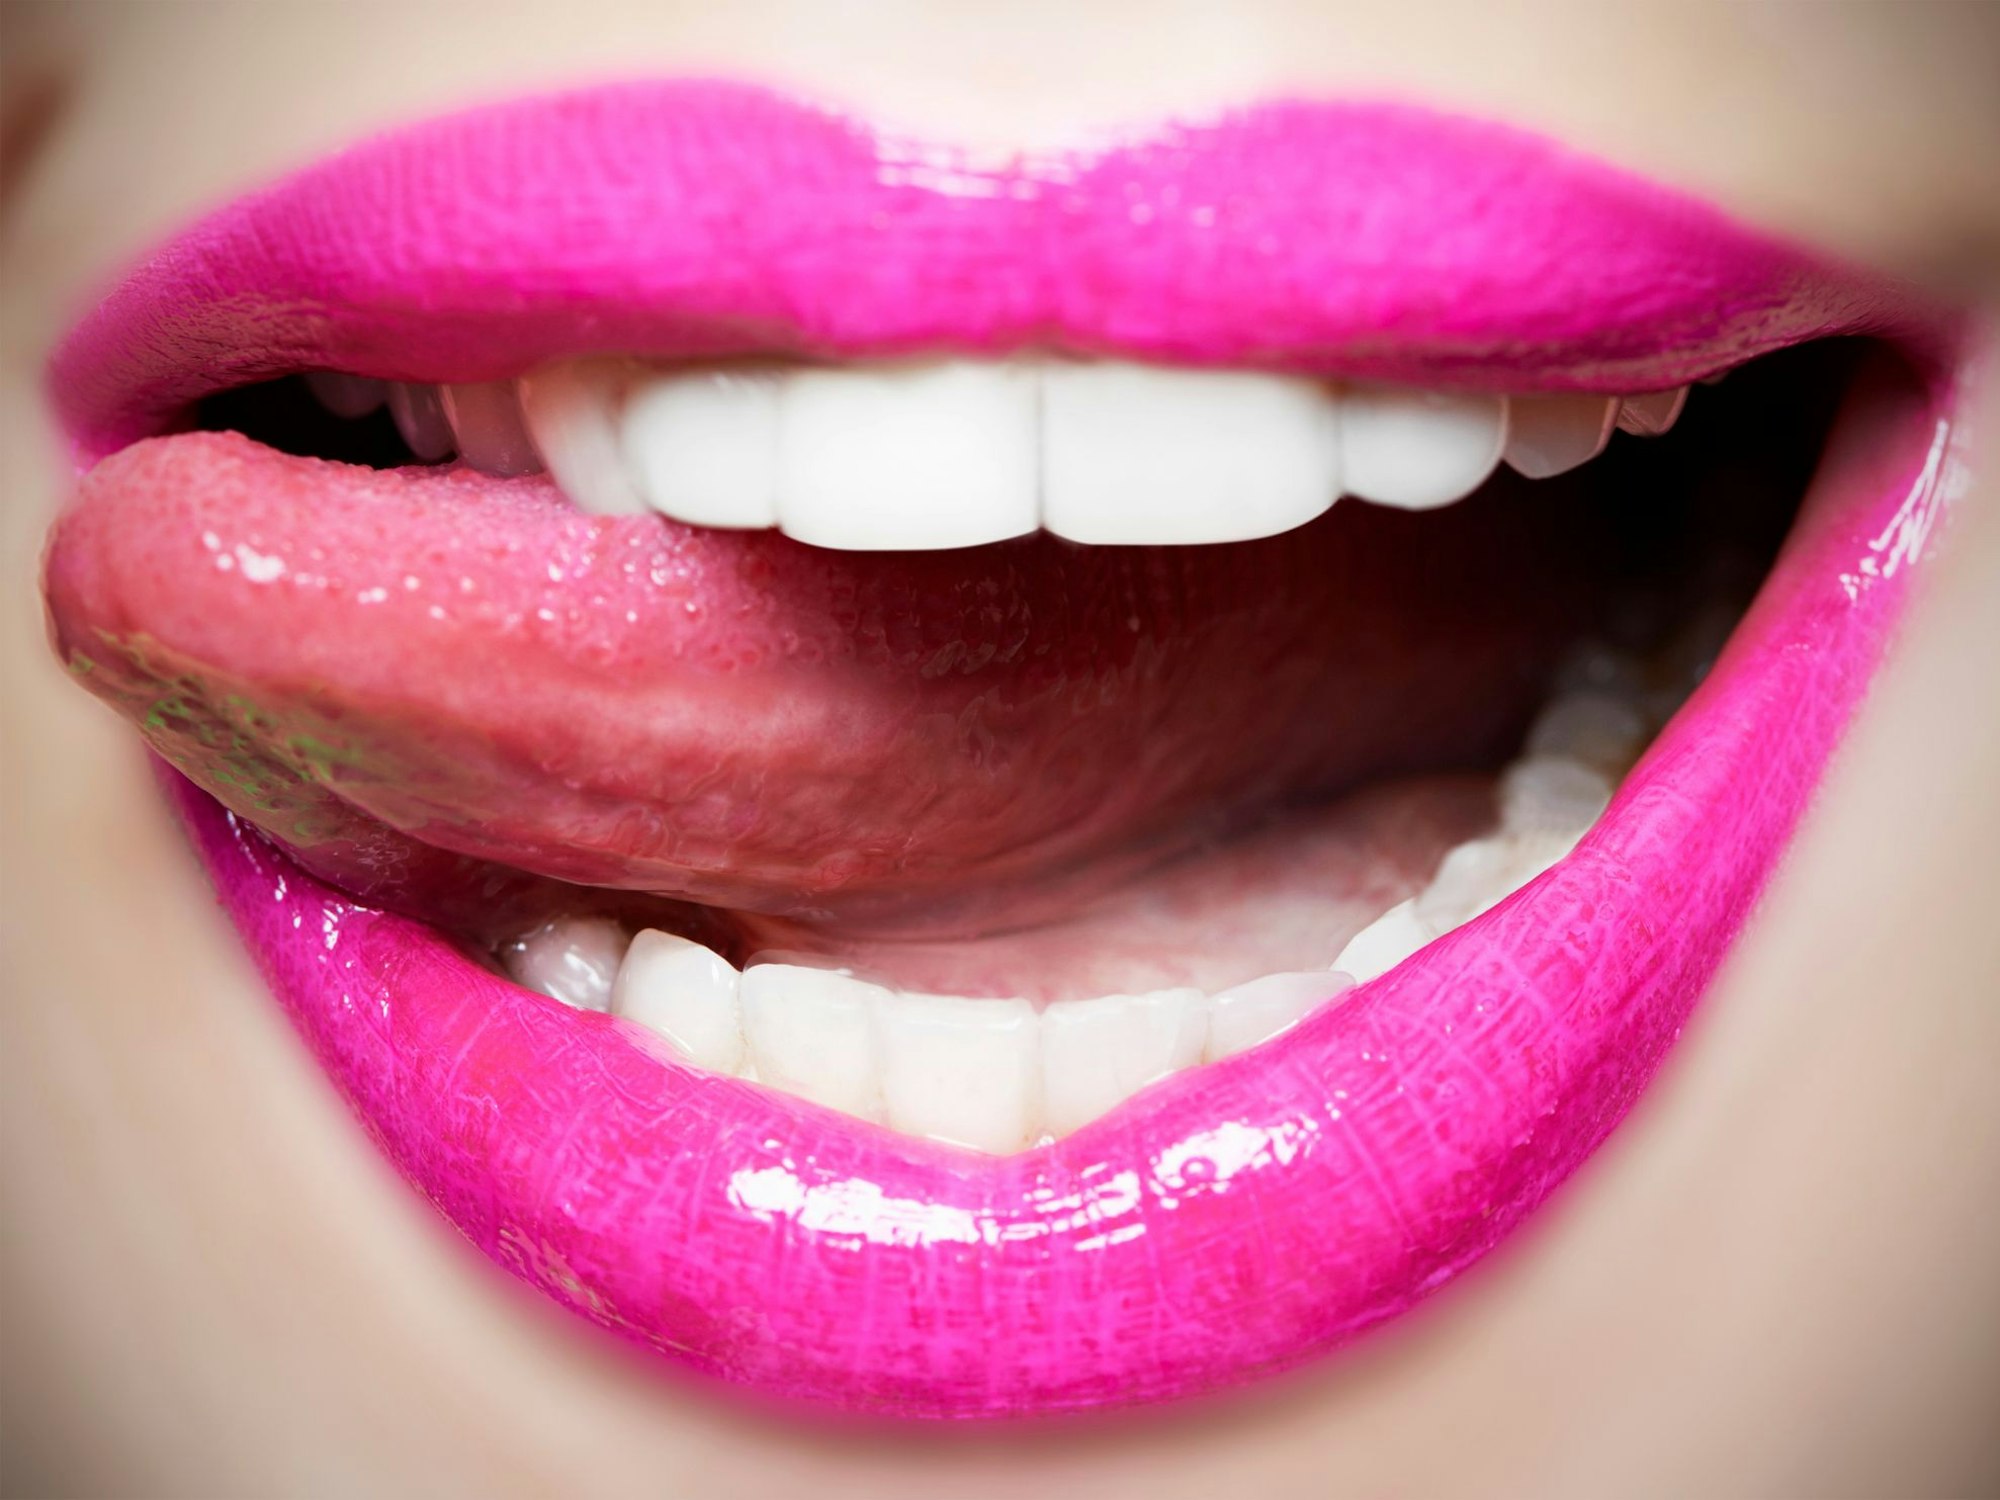 Junge Frau leckt sich über pink geschminkte Lippen